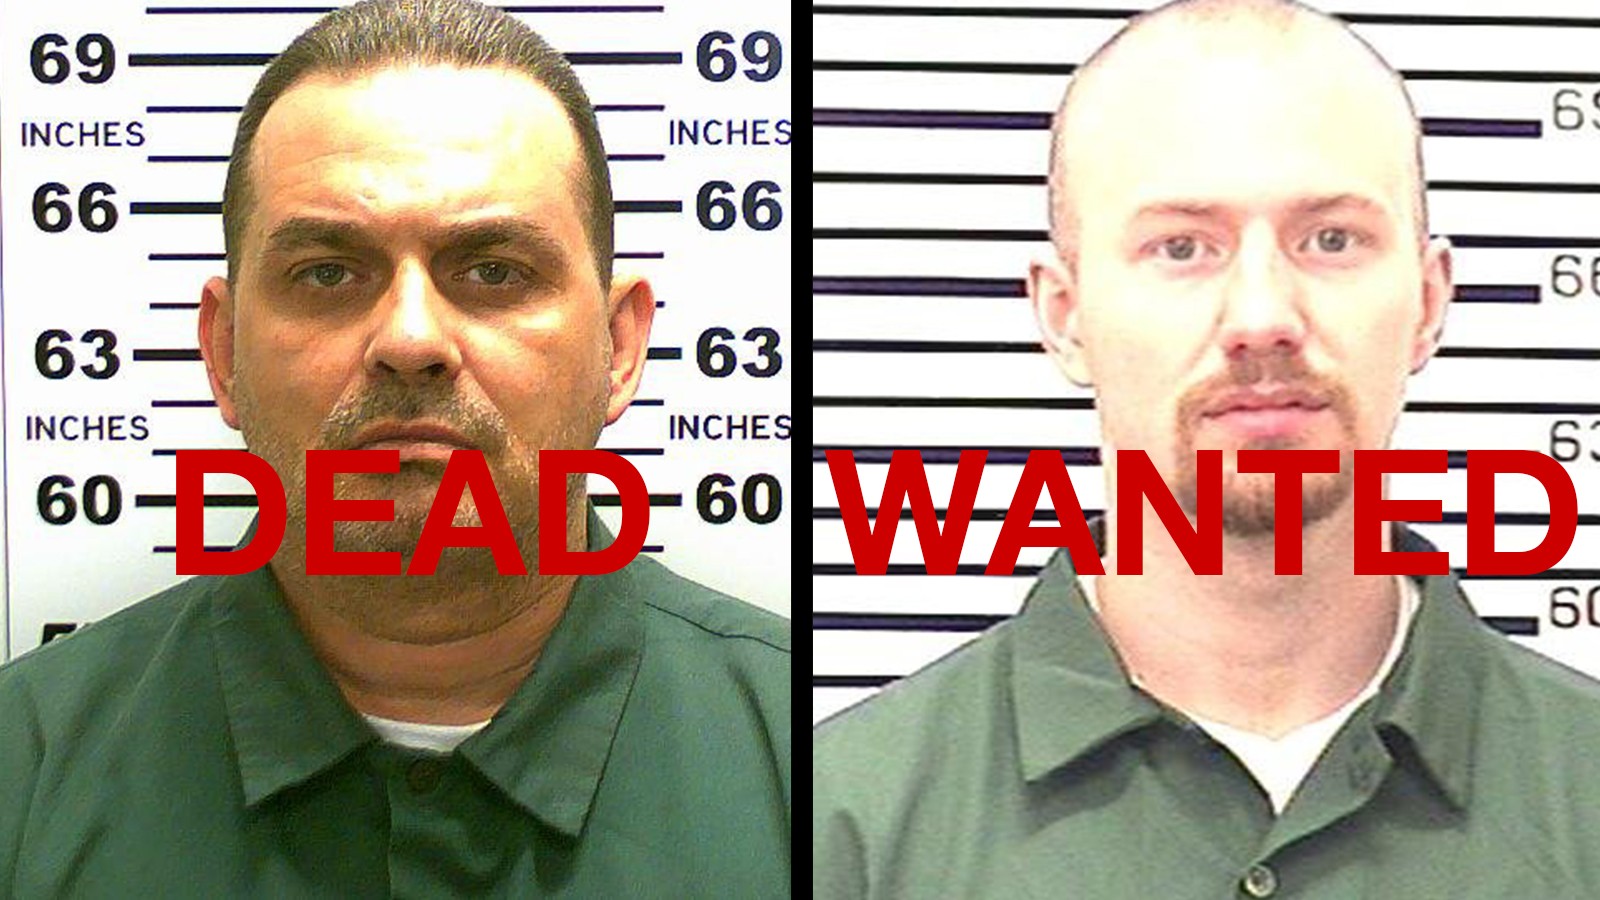 New York Prison Escapee Richard Matt Killed Cnn